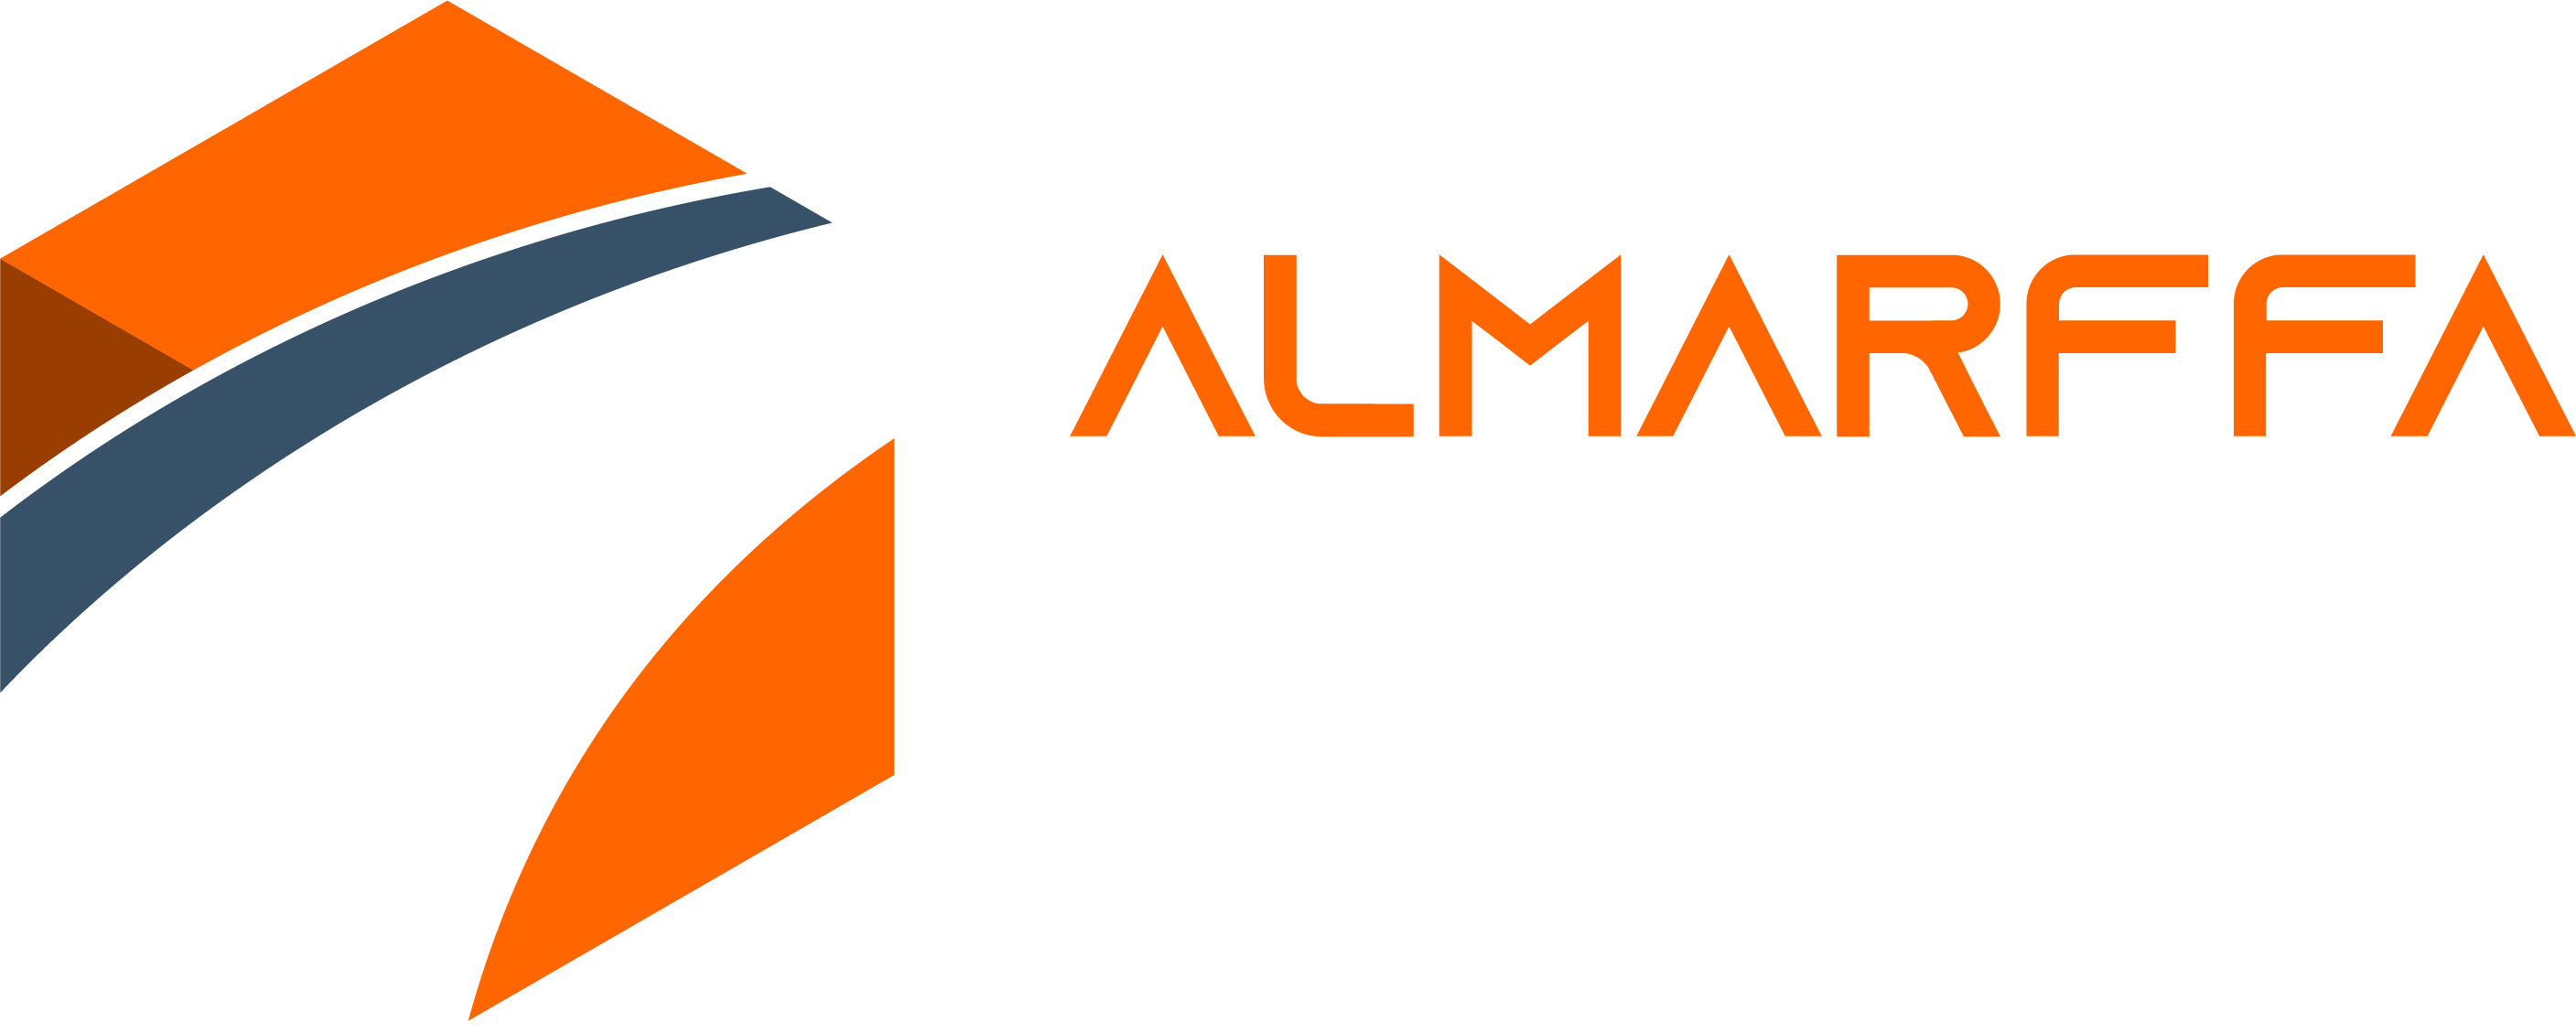 Almarffa Group